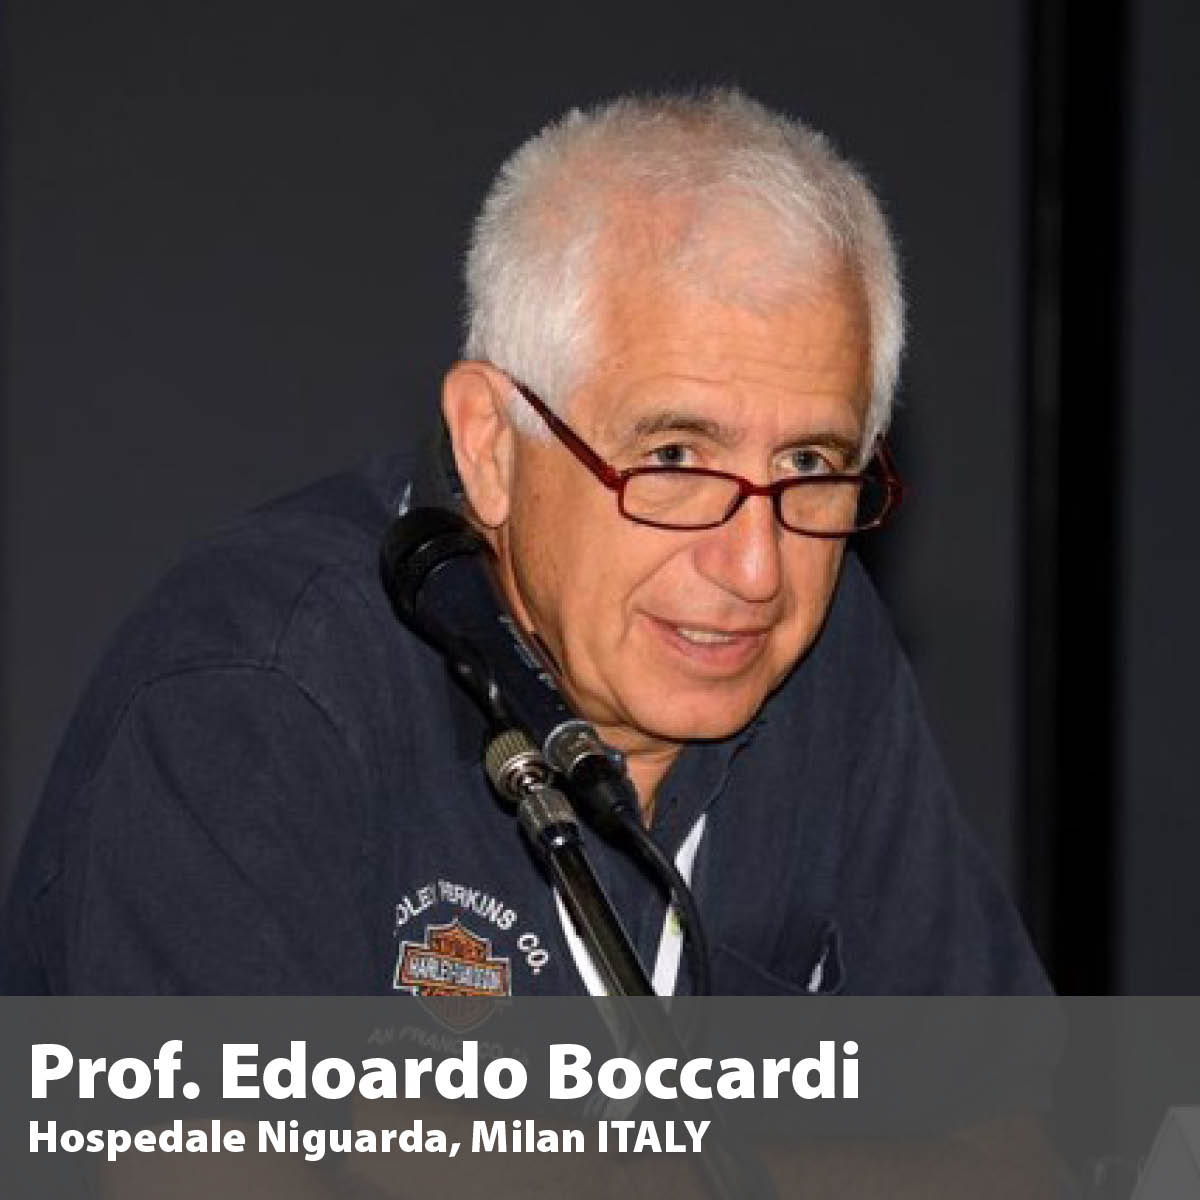 Mentor Edoardo Boccardi